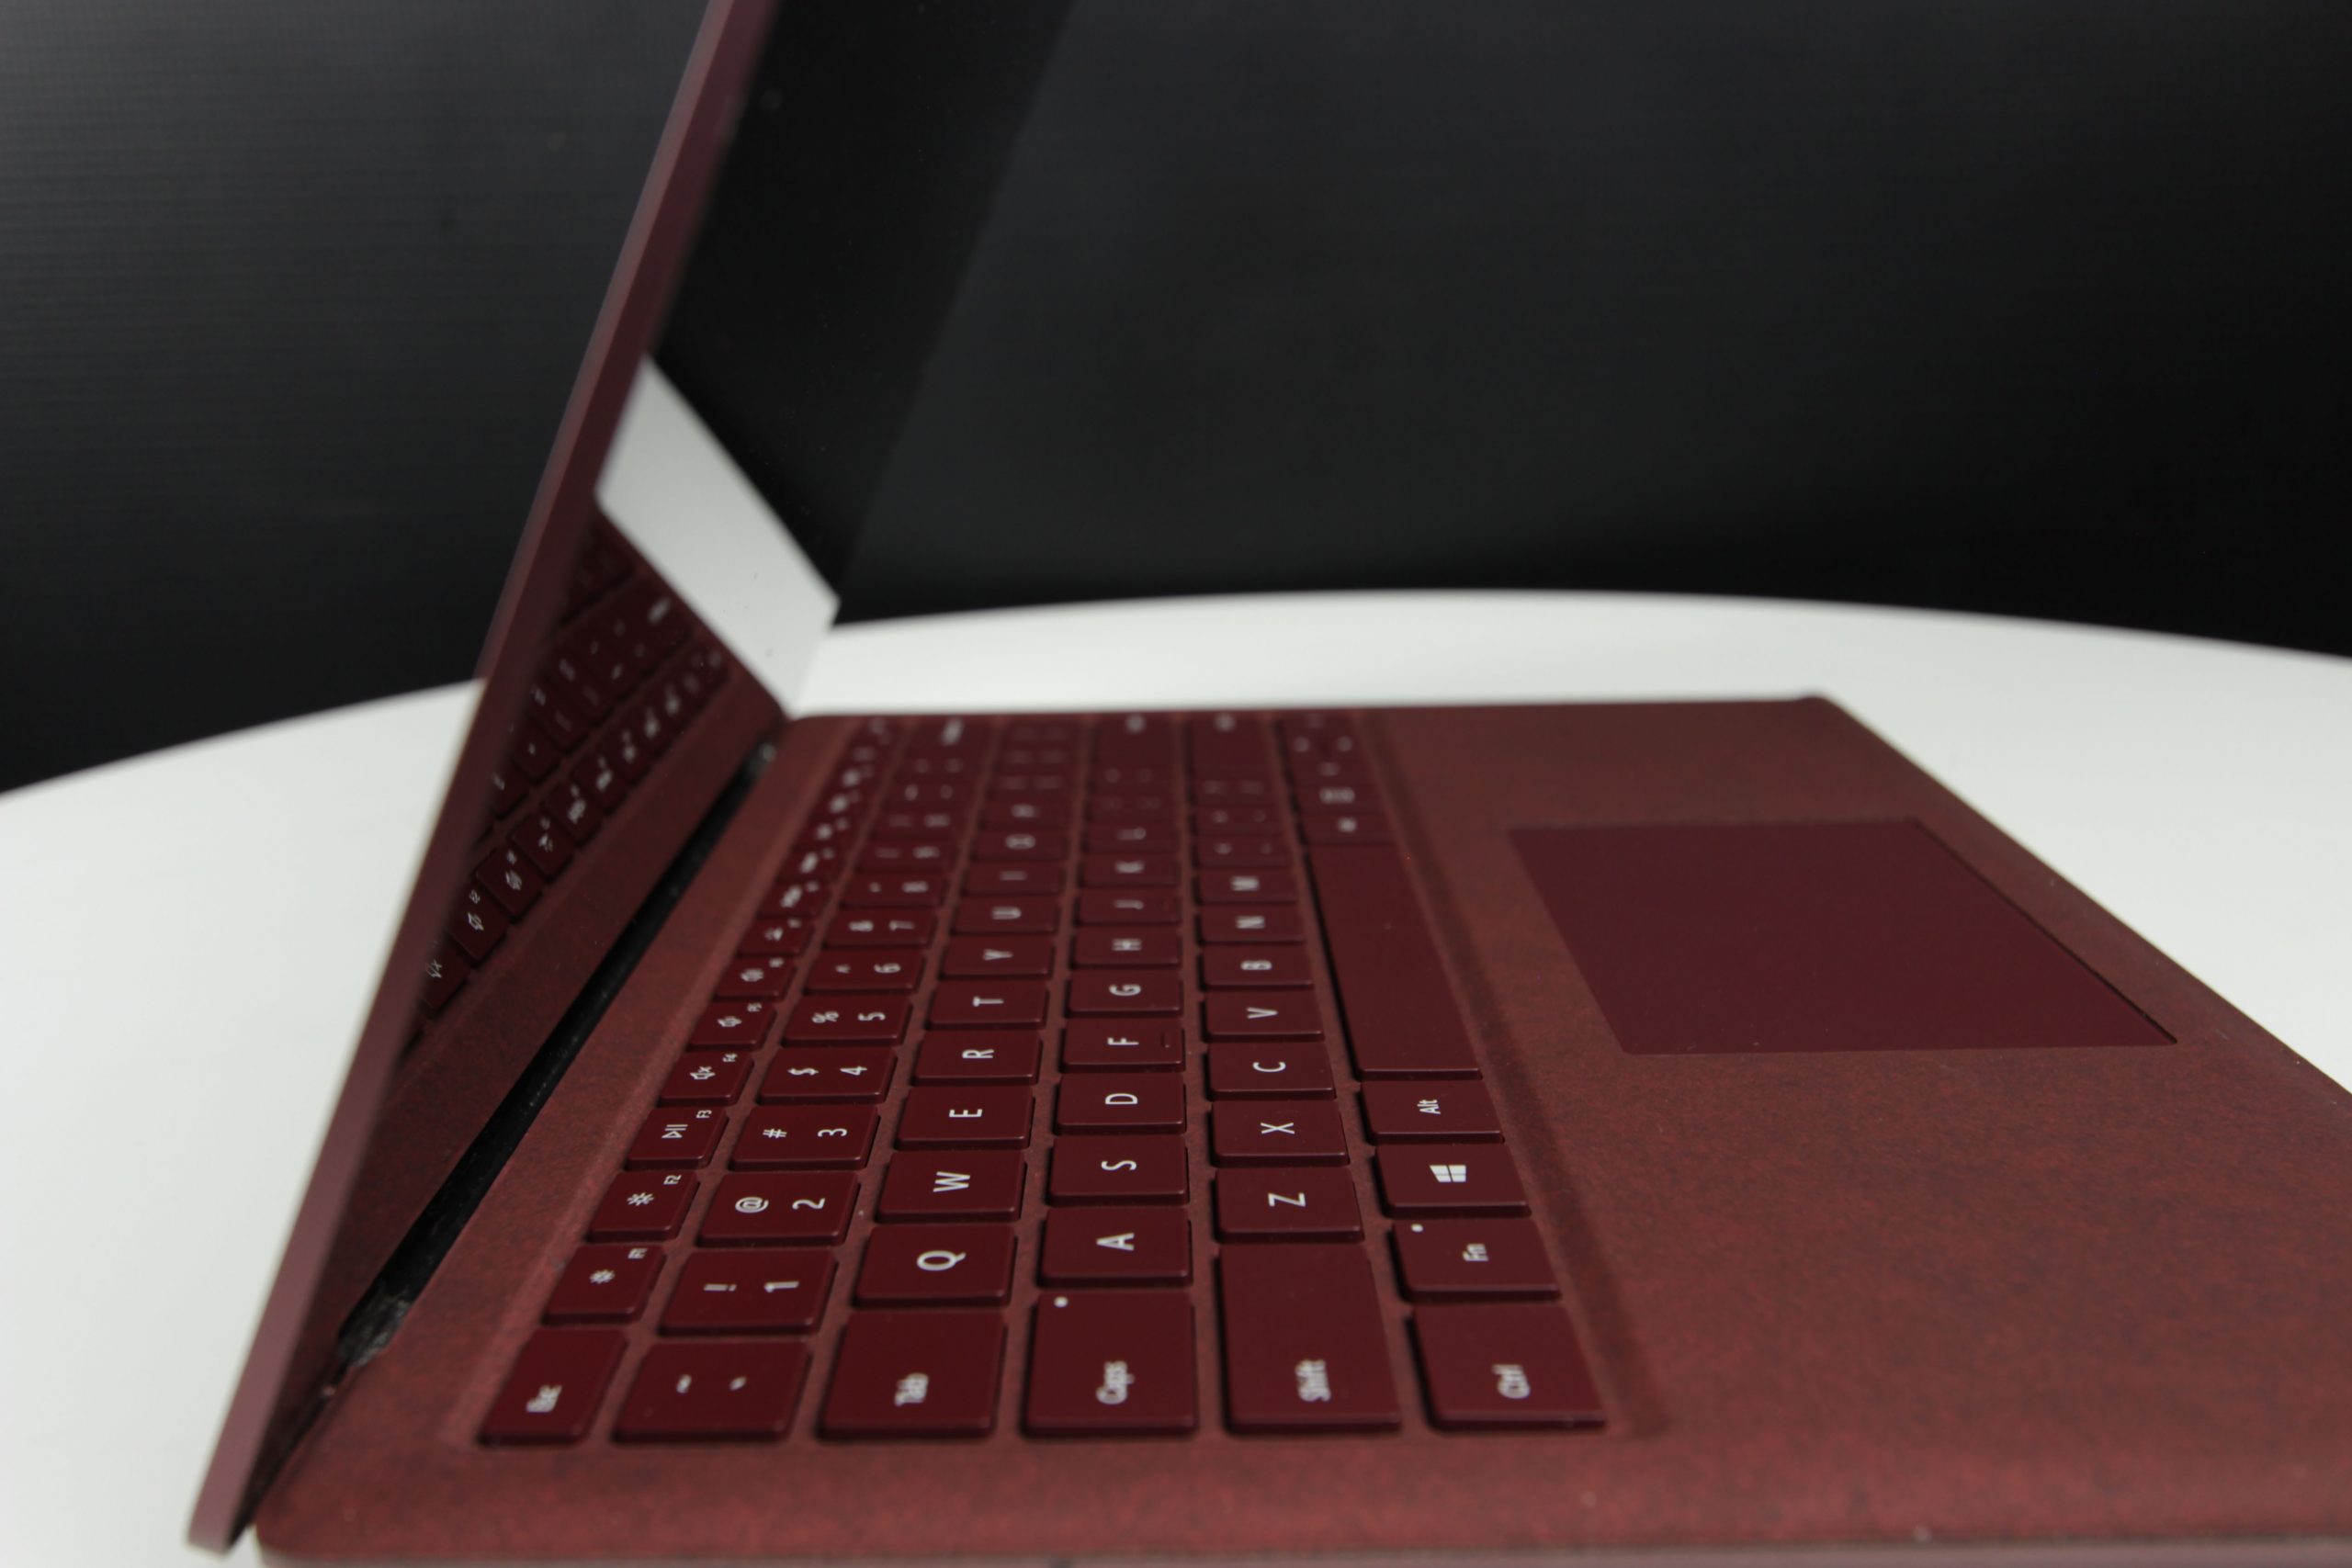 Microsoft Surface Laptop i7-7600U 256GB SSD 8GB Ram 13.5" Notebook PC